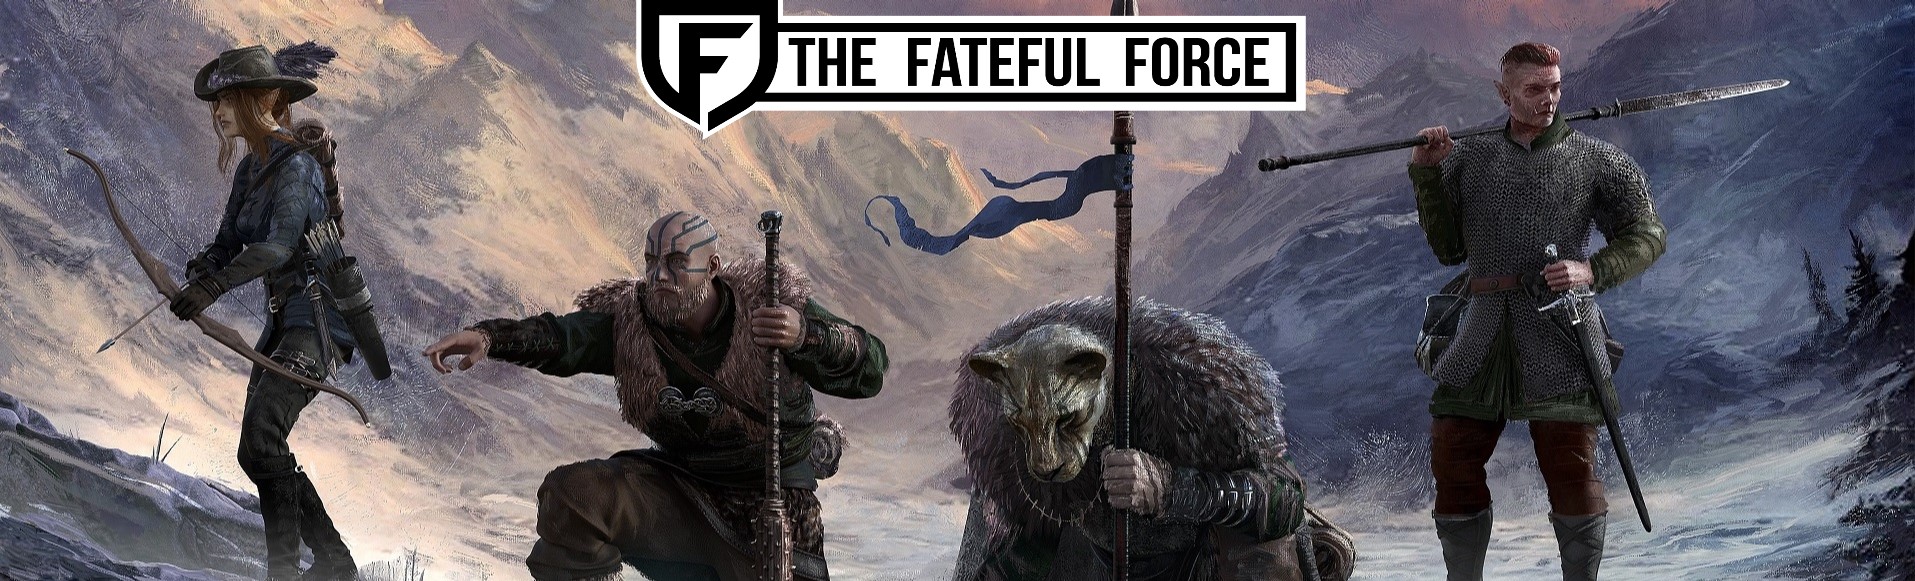 The Fateful Force